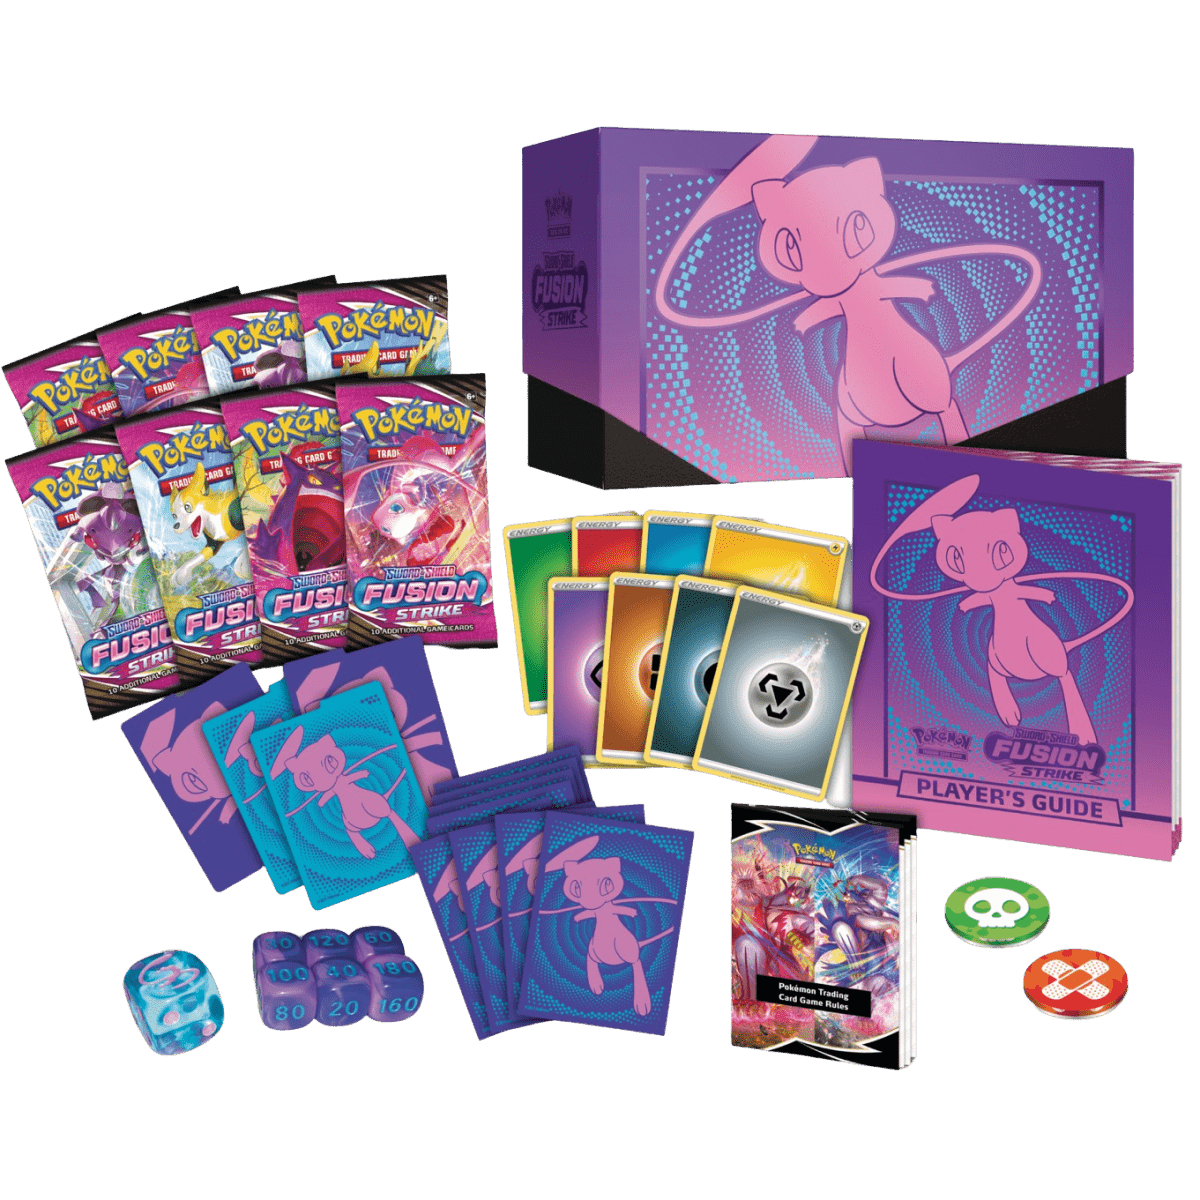 Pokemon TCG: Fusion Strike Elite Trainer Box - The Card Vault